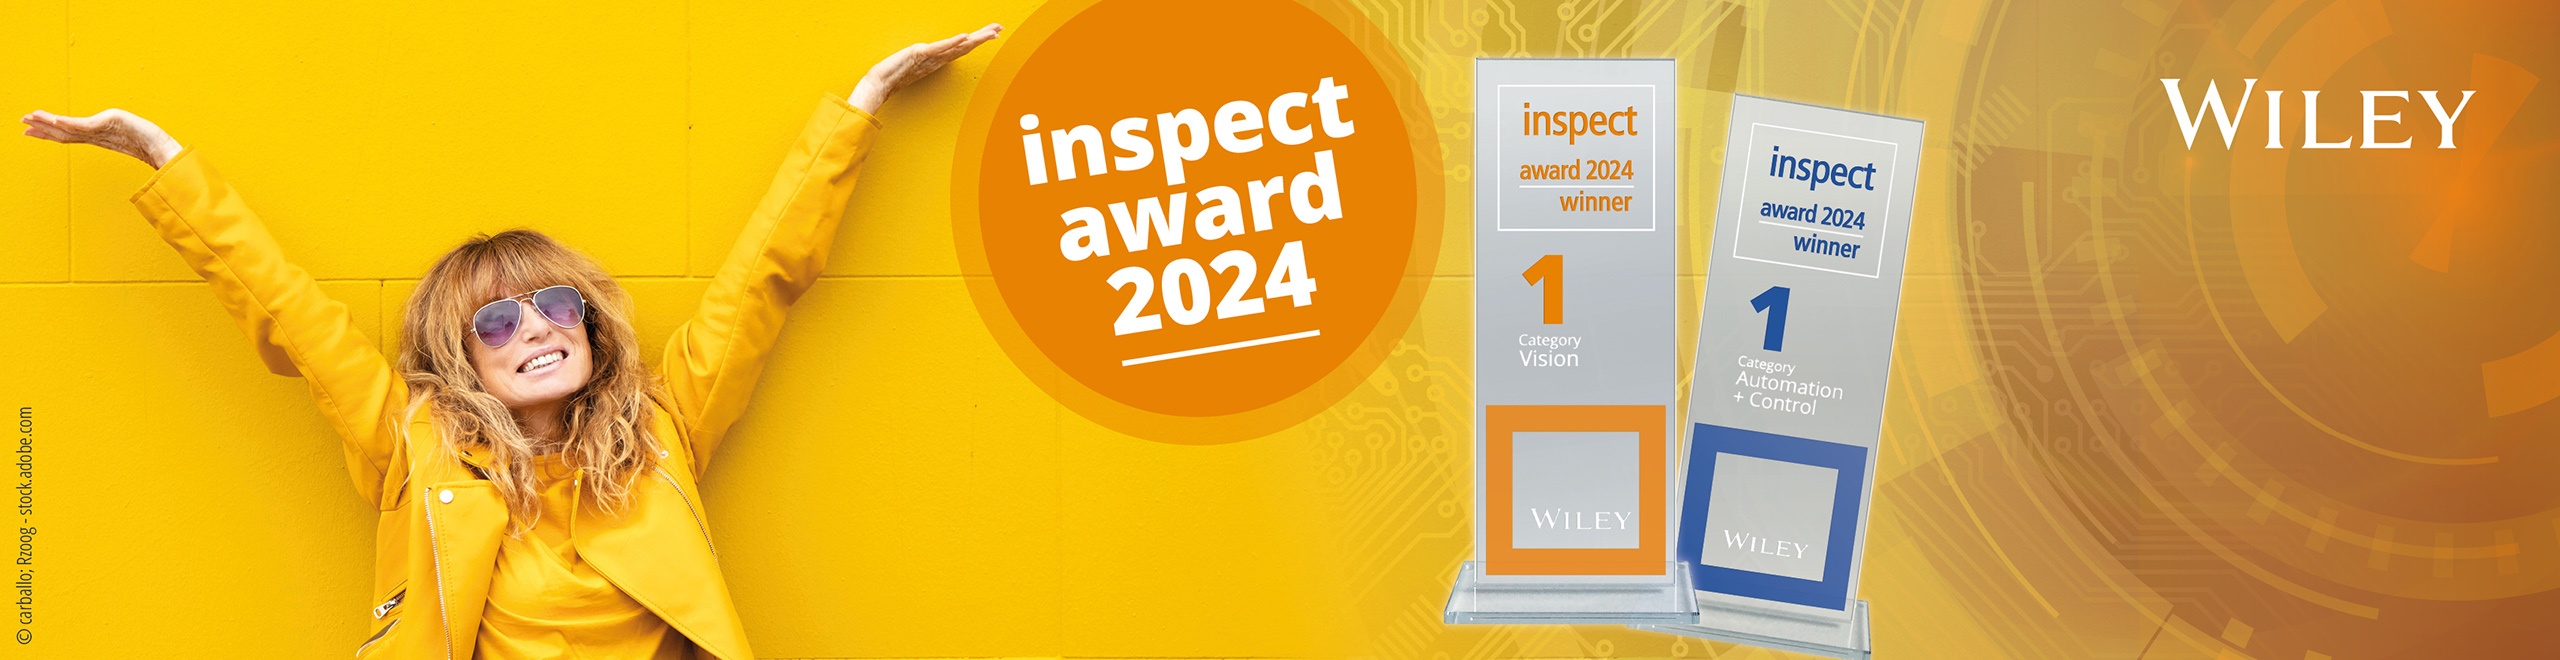 inspect award